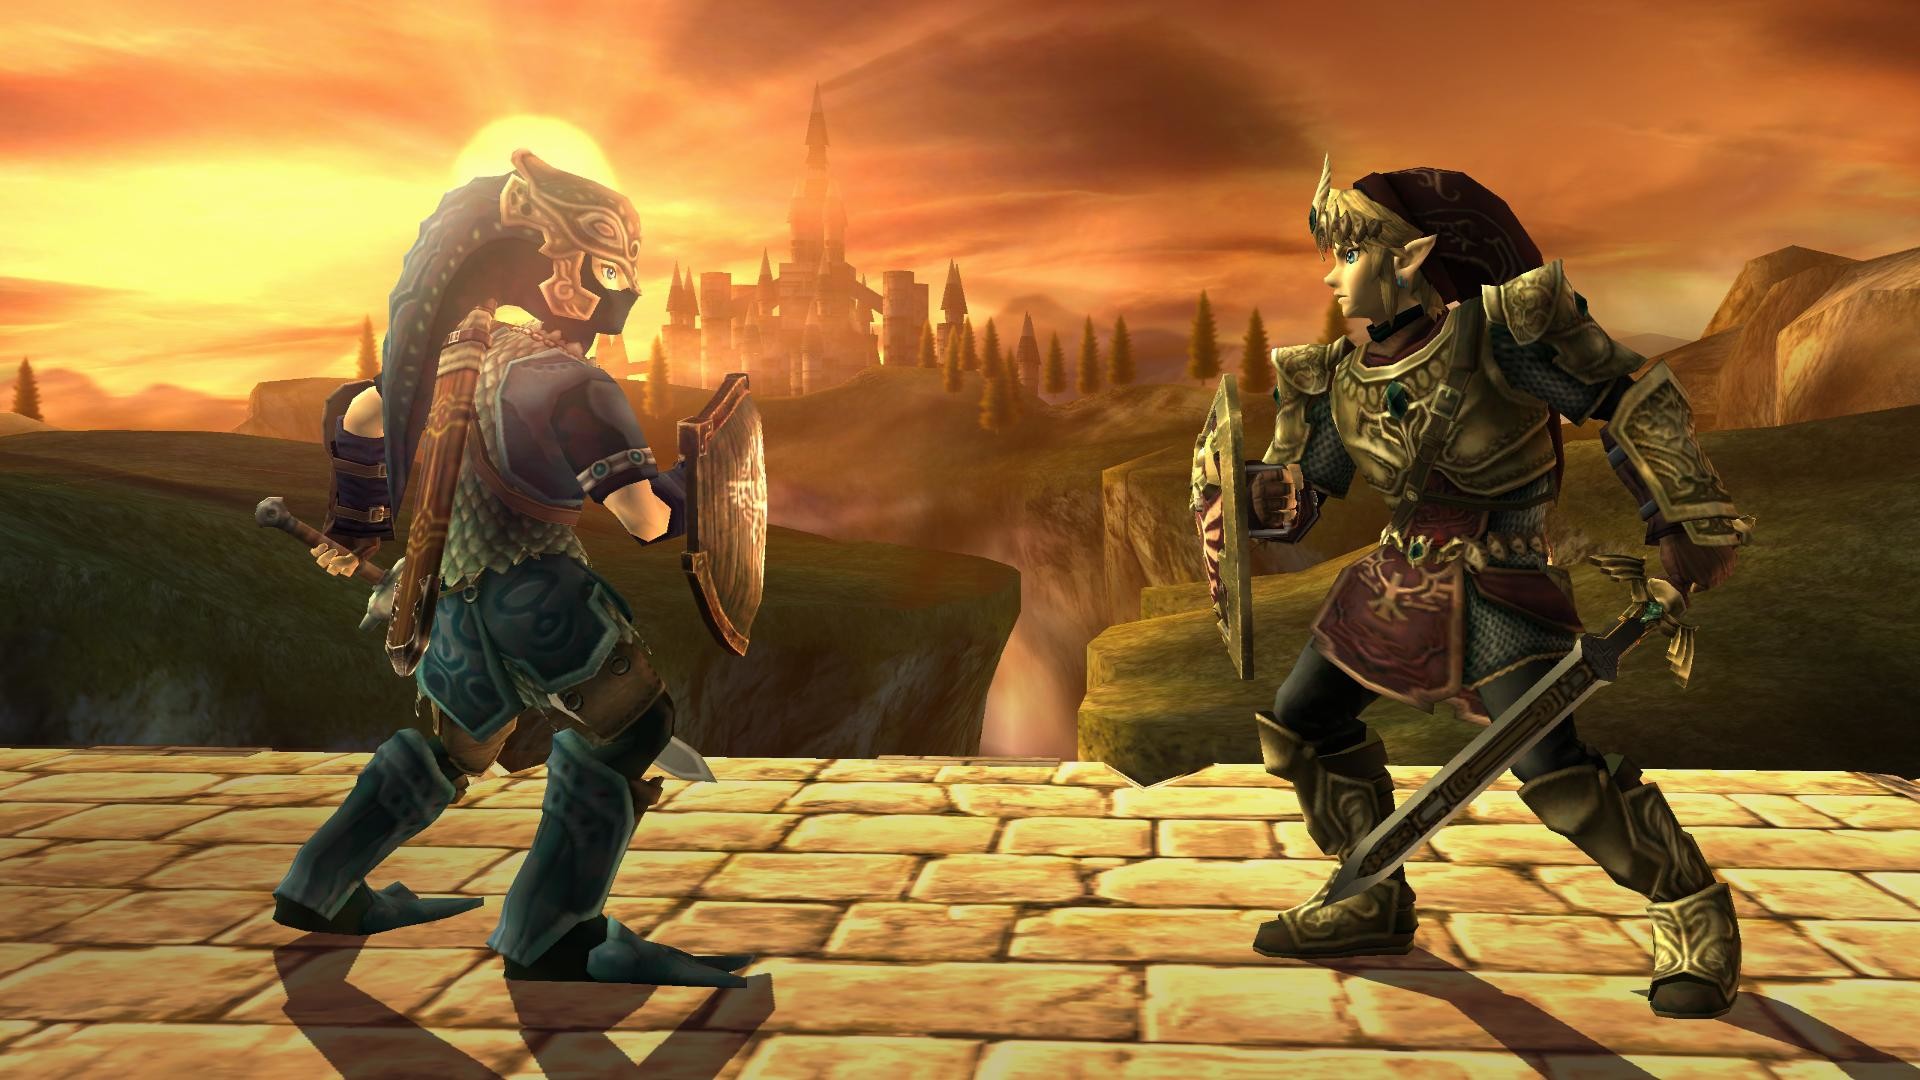 Wallpaper.wiki The Legend Of Zelda Twilight Princess